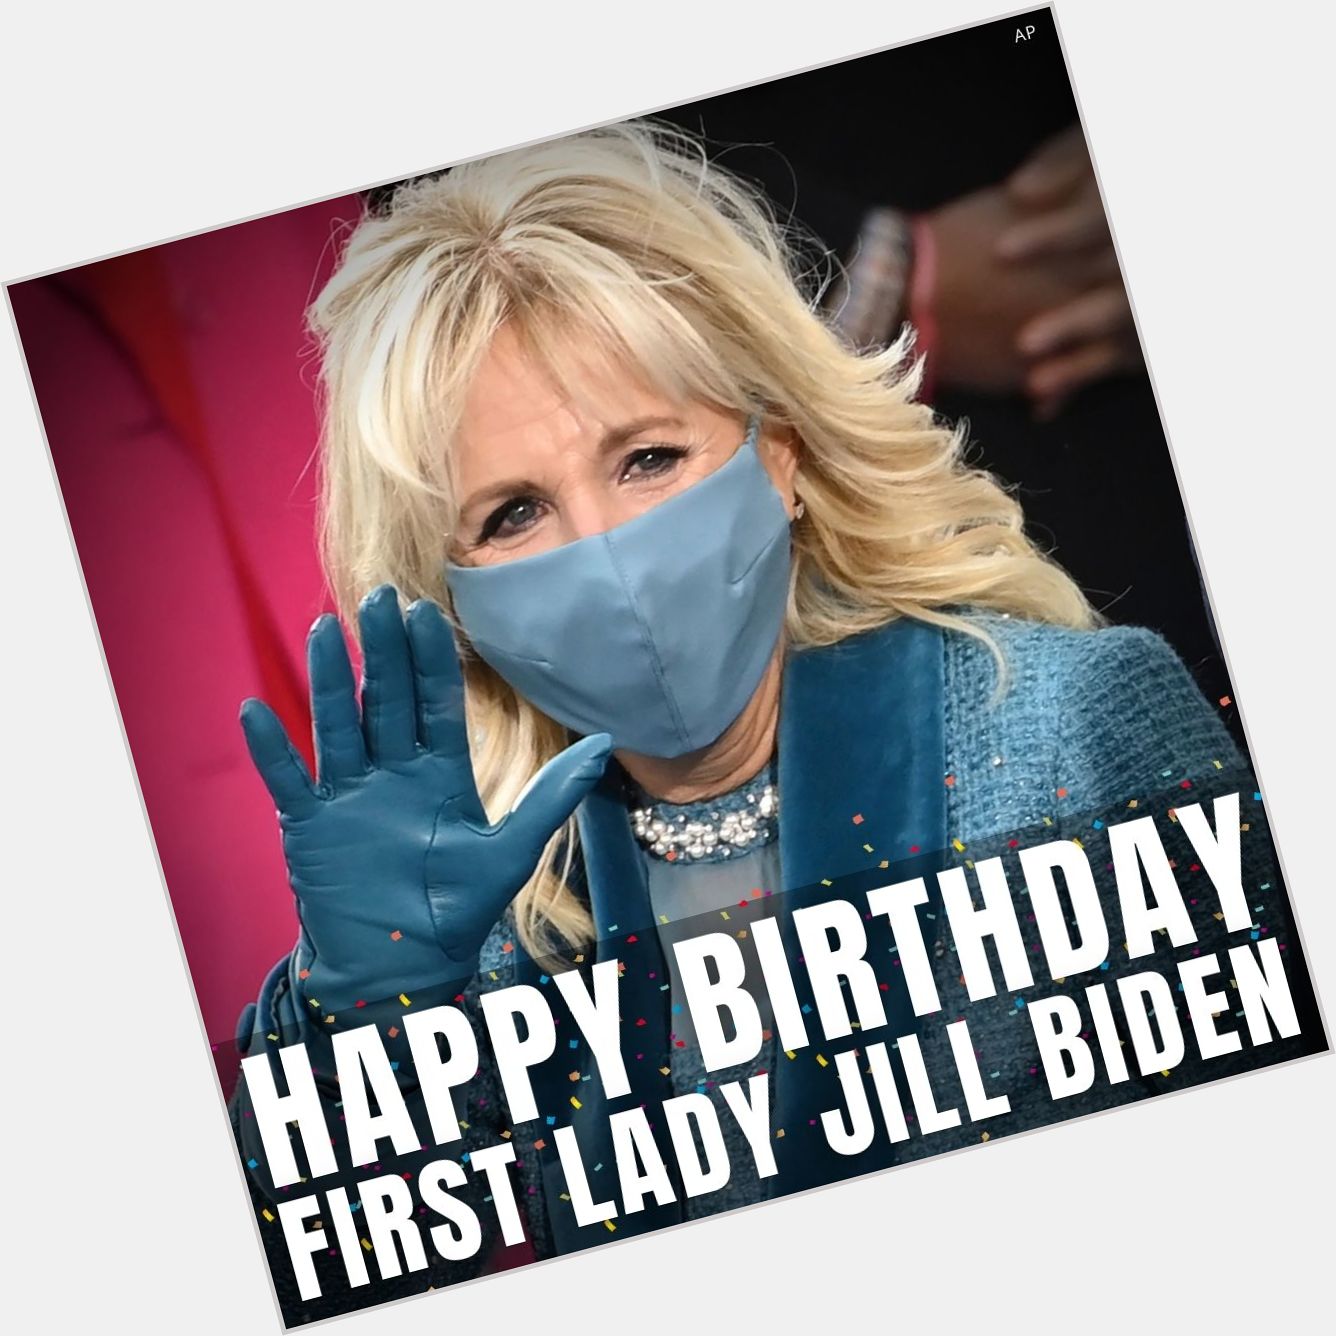 Happy Birthday to First Lady Jill Biden! She turns 70 today. >>>  